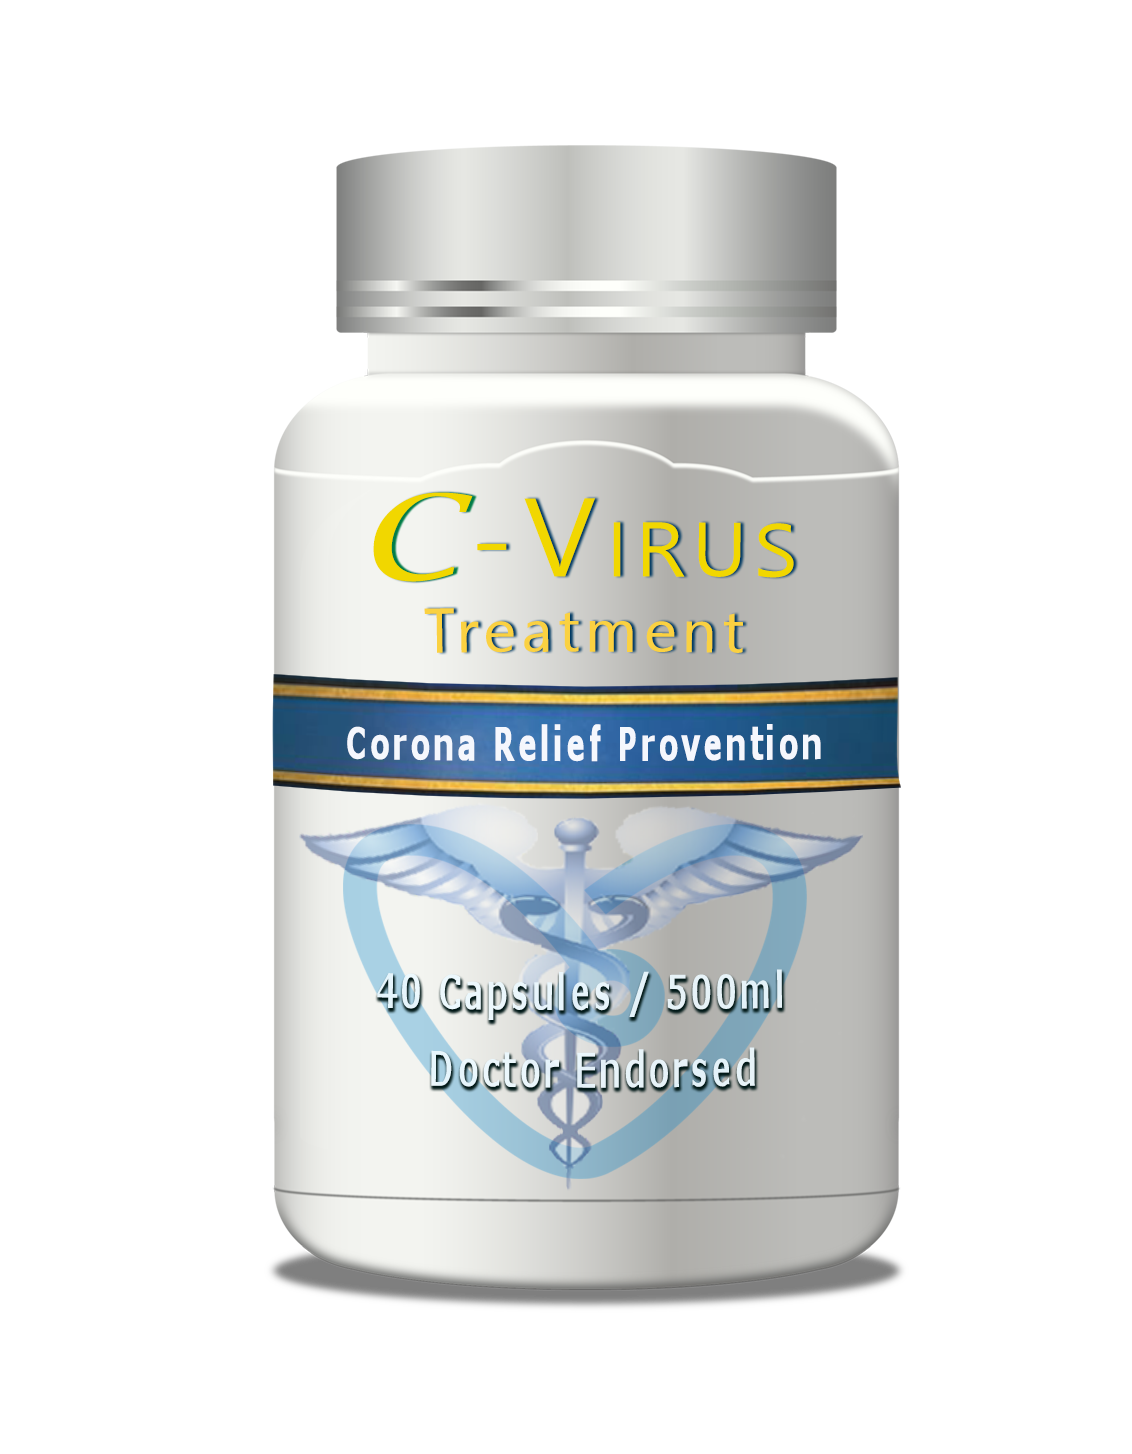 C-Virus Corona Immune Builder Compound immune system Builder. Helps protect: INFO aviruscorona.com